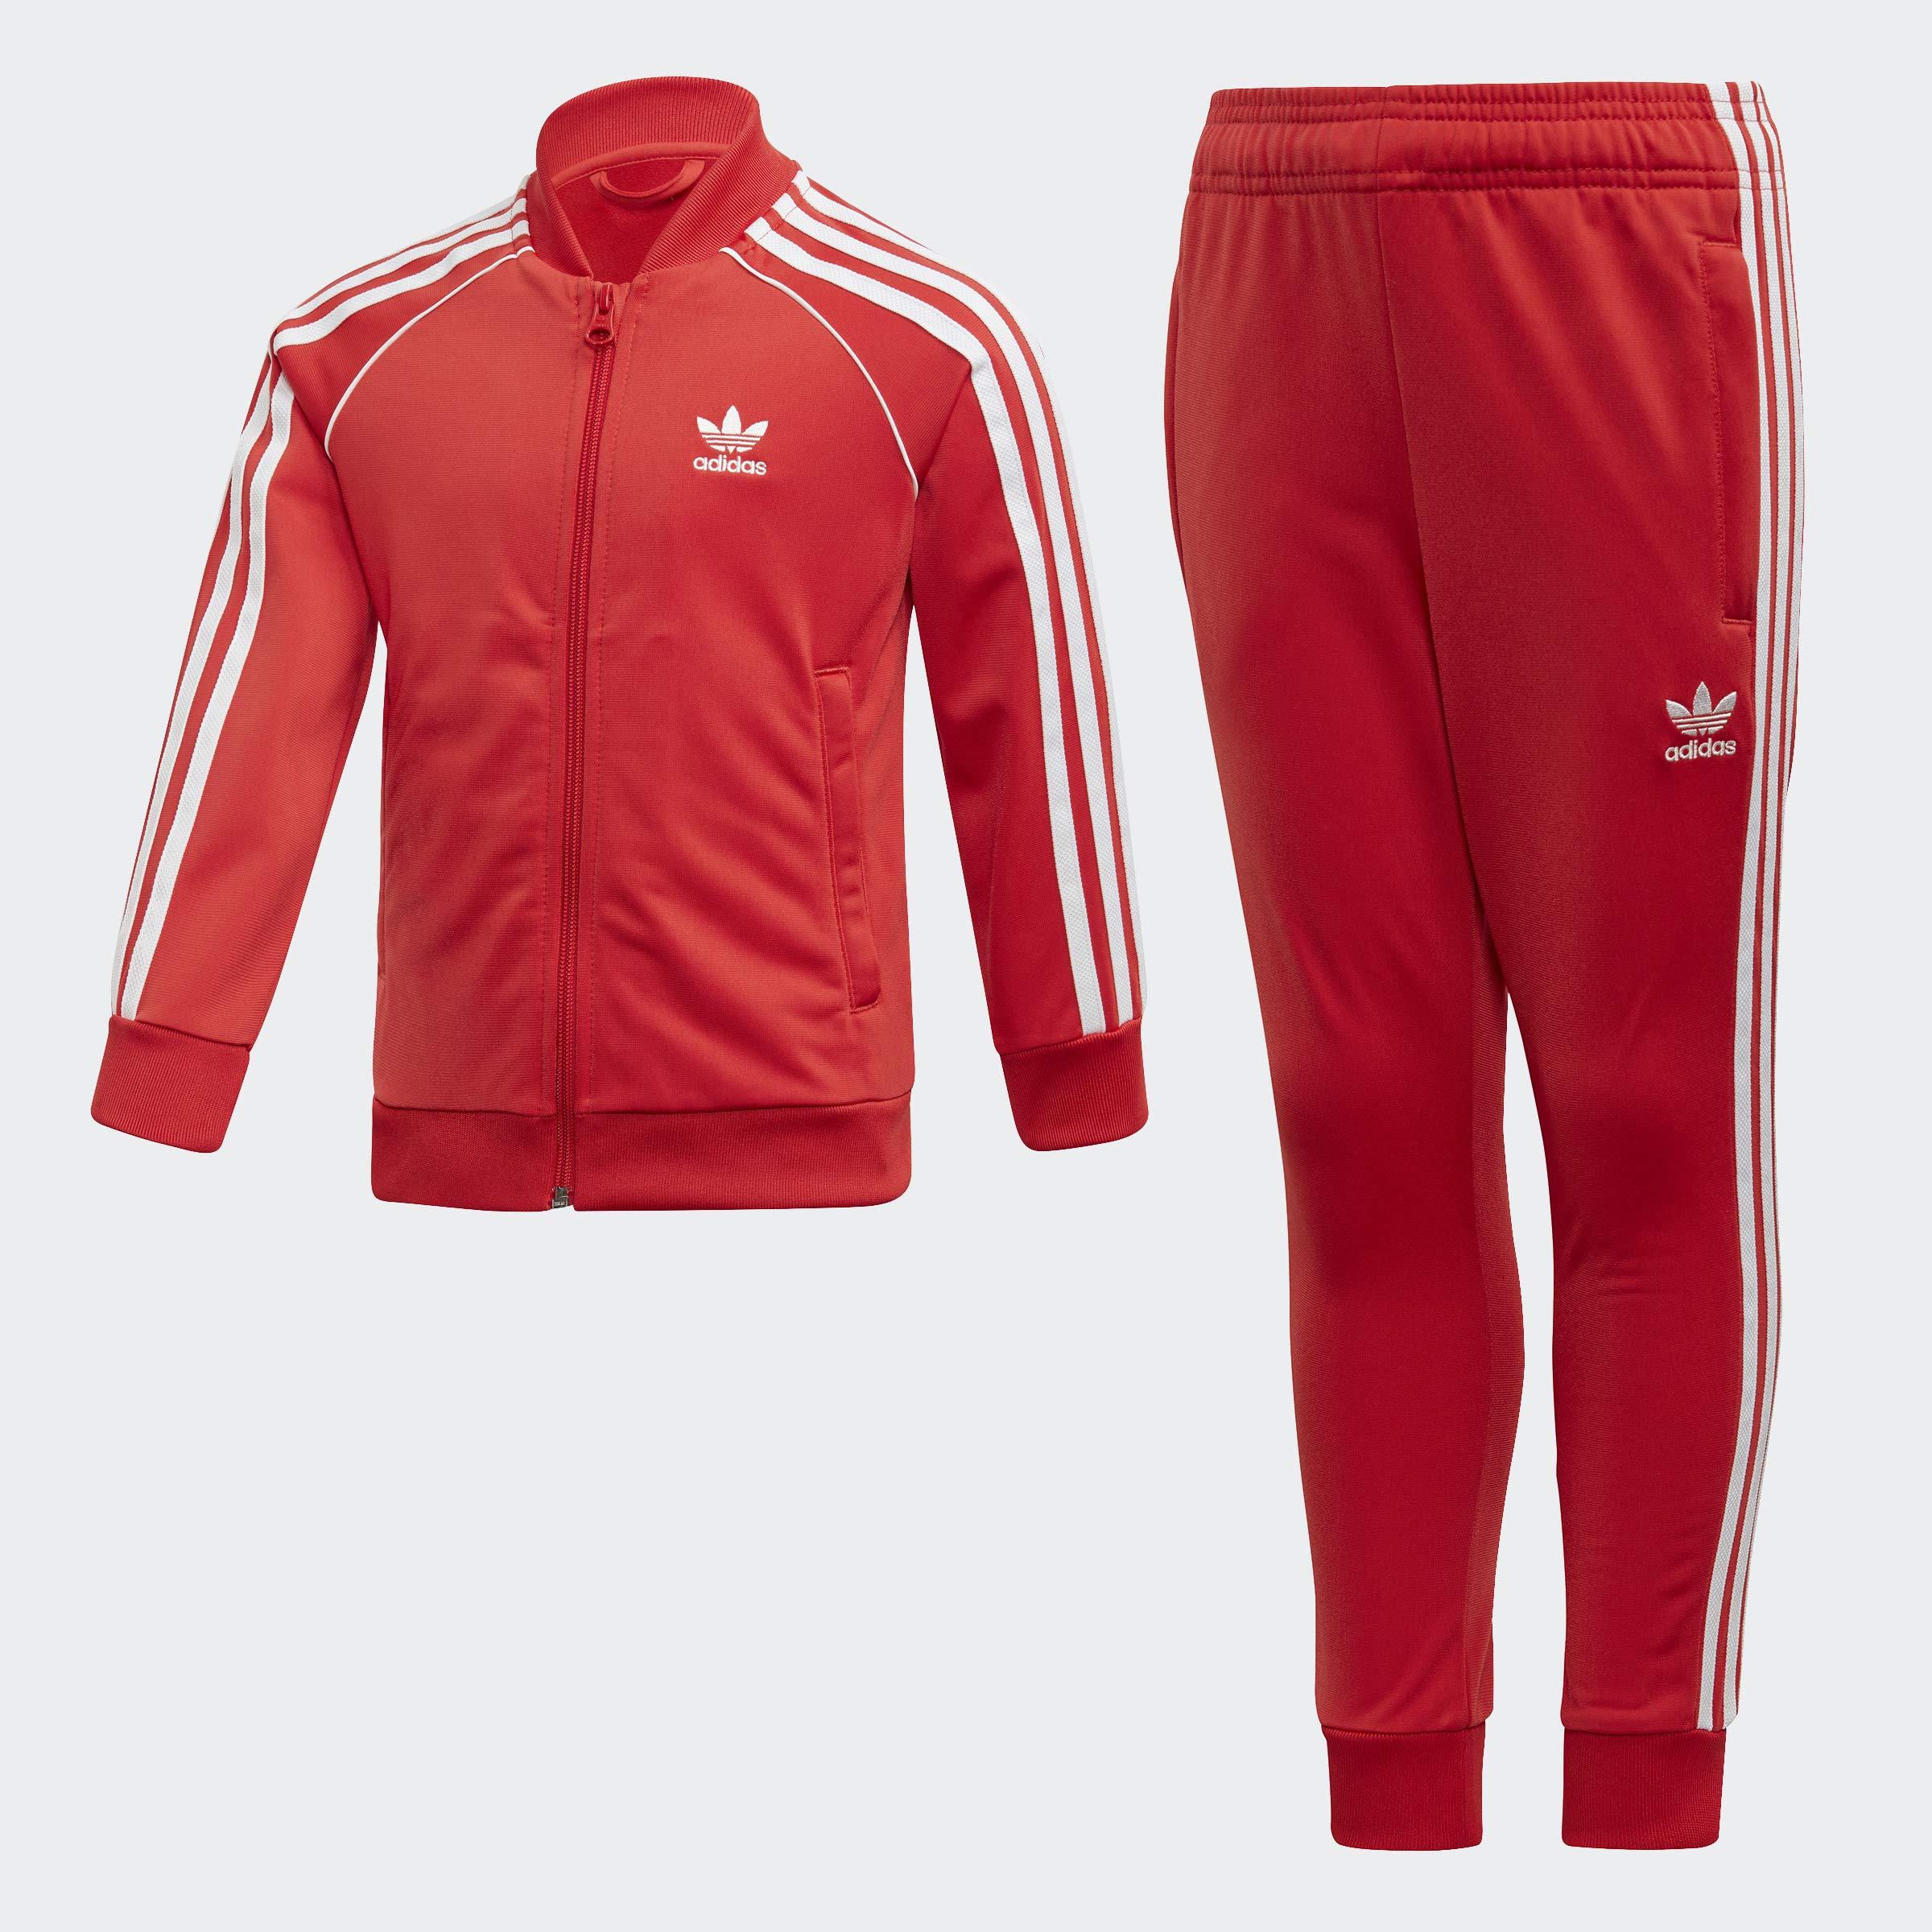 adidas Originals Superstar Track Suit in Red for Men - Lyst